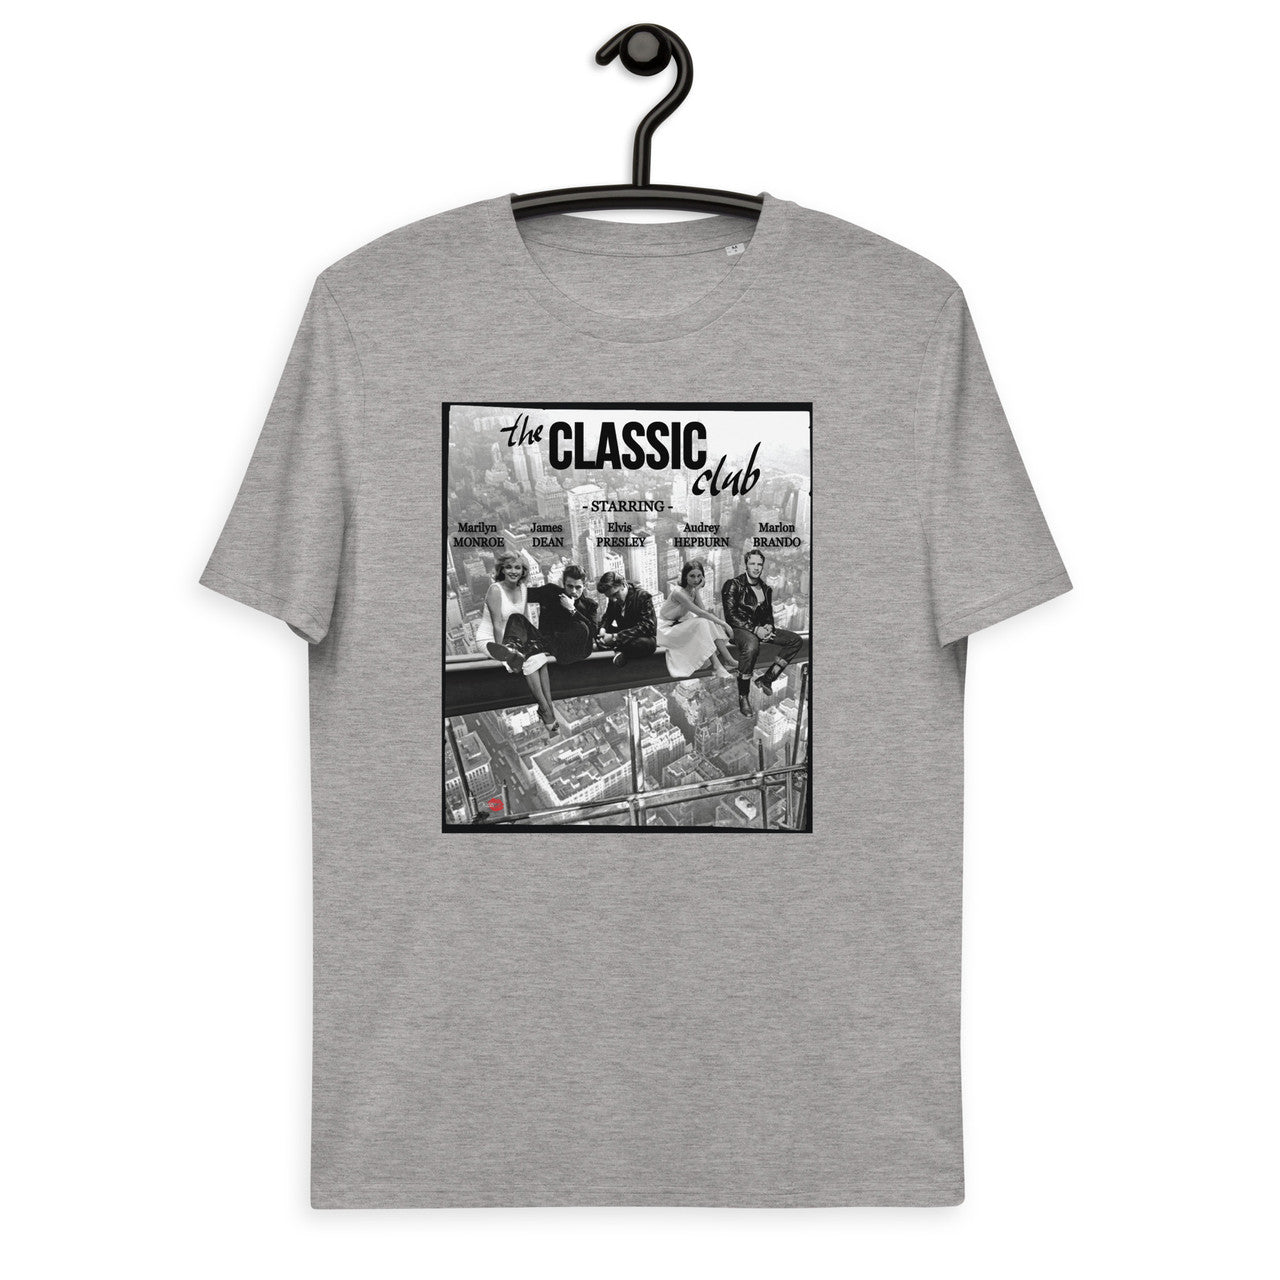 Classic Club KiSS Unisex organic cotton t-shirt - Marilyn Monroe, James Dean, Elvis, Marlon Brando, Audrey Hepburn